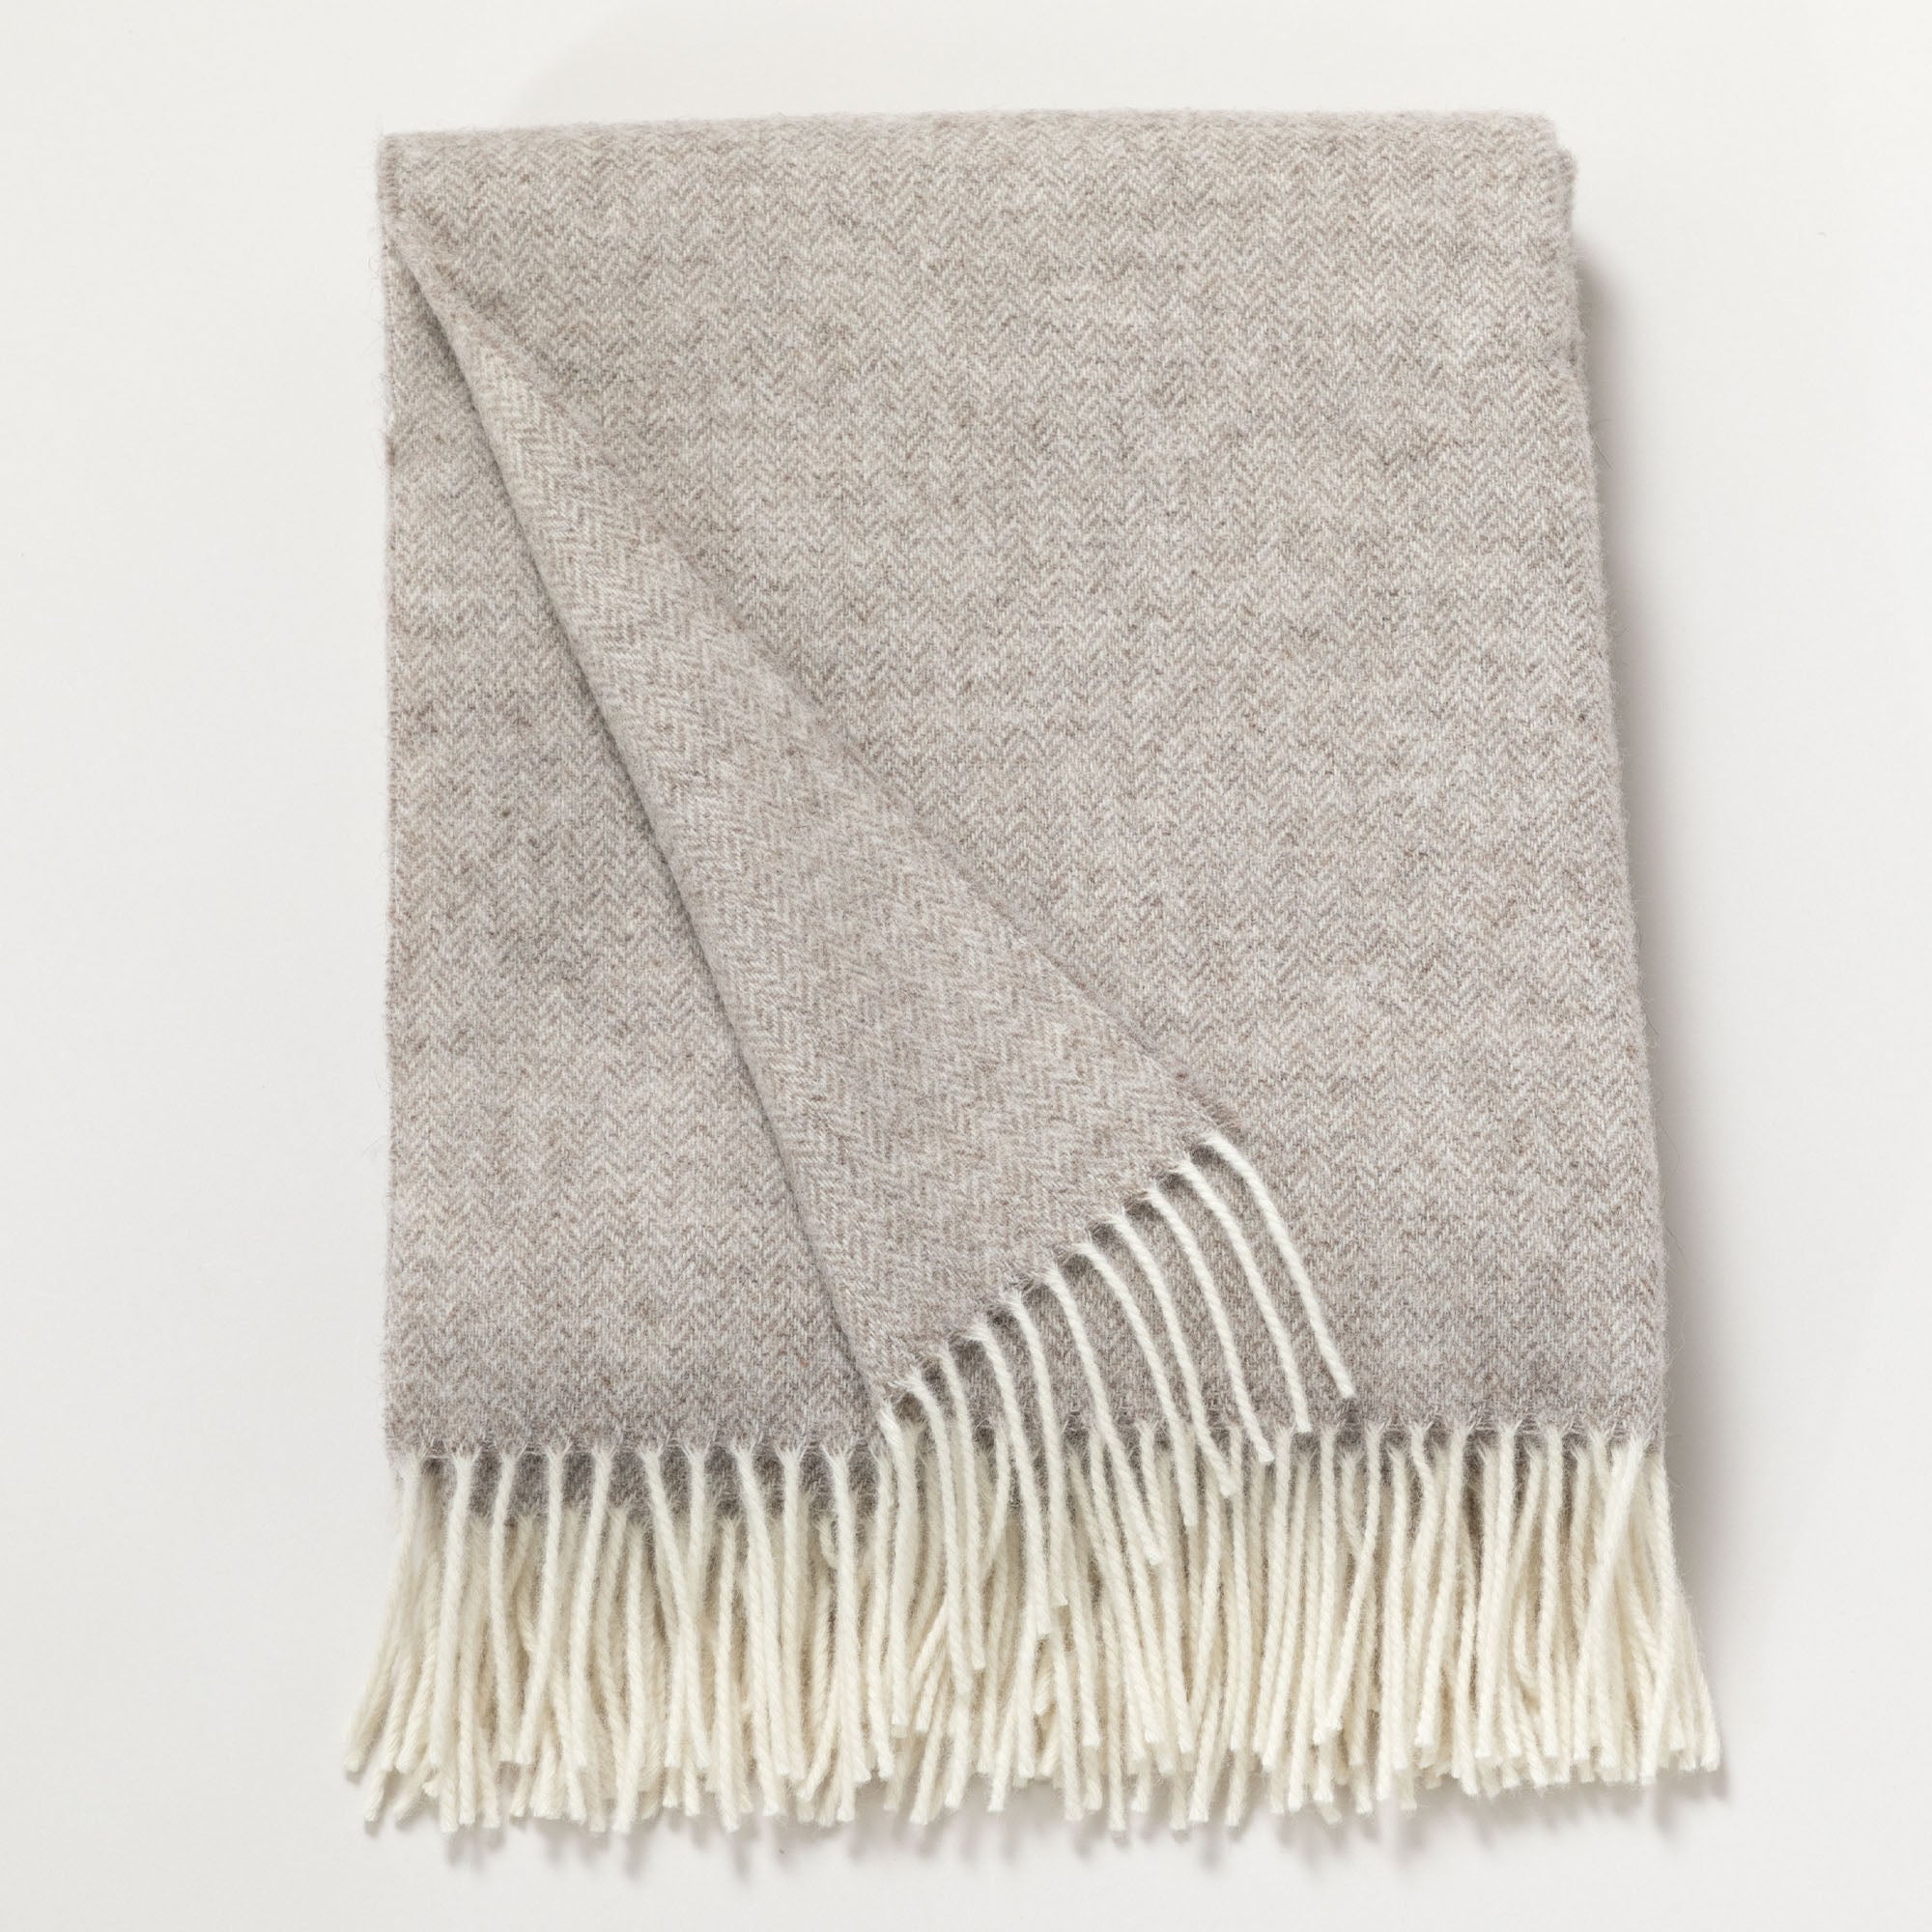 Ukrainian 100% Merino Wool Throw Blanket - Taupe